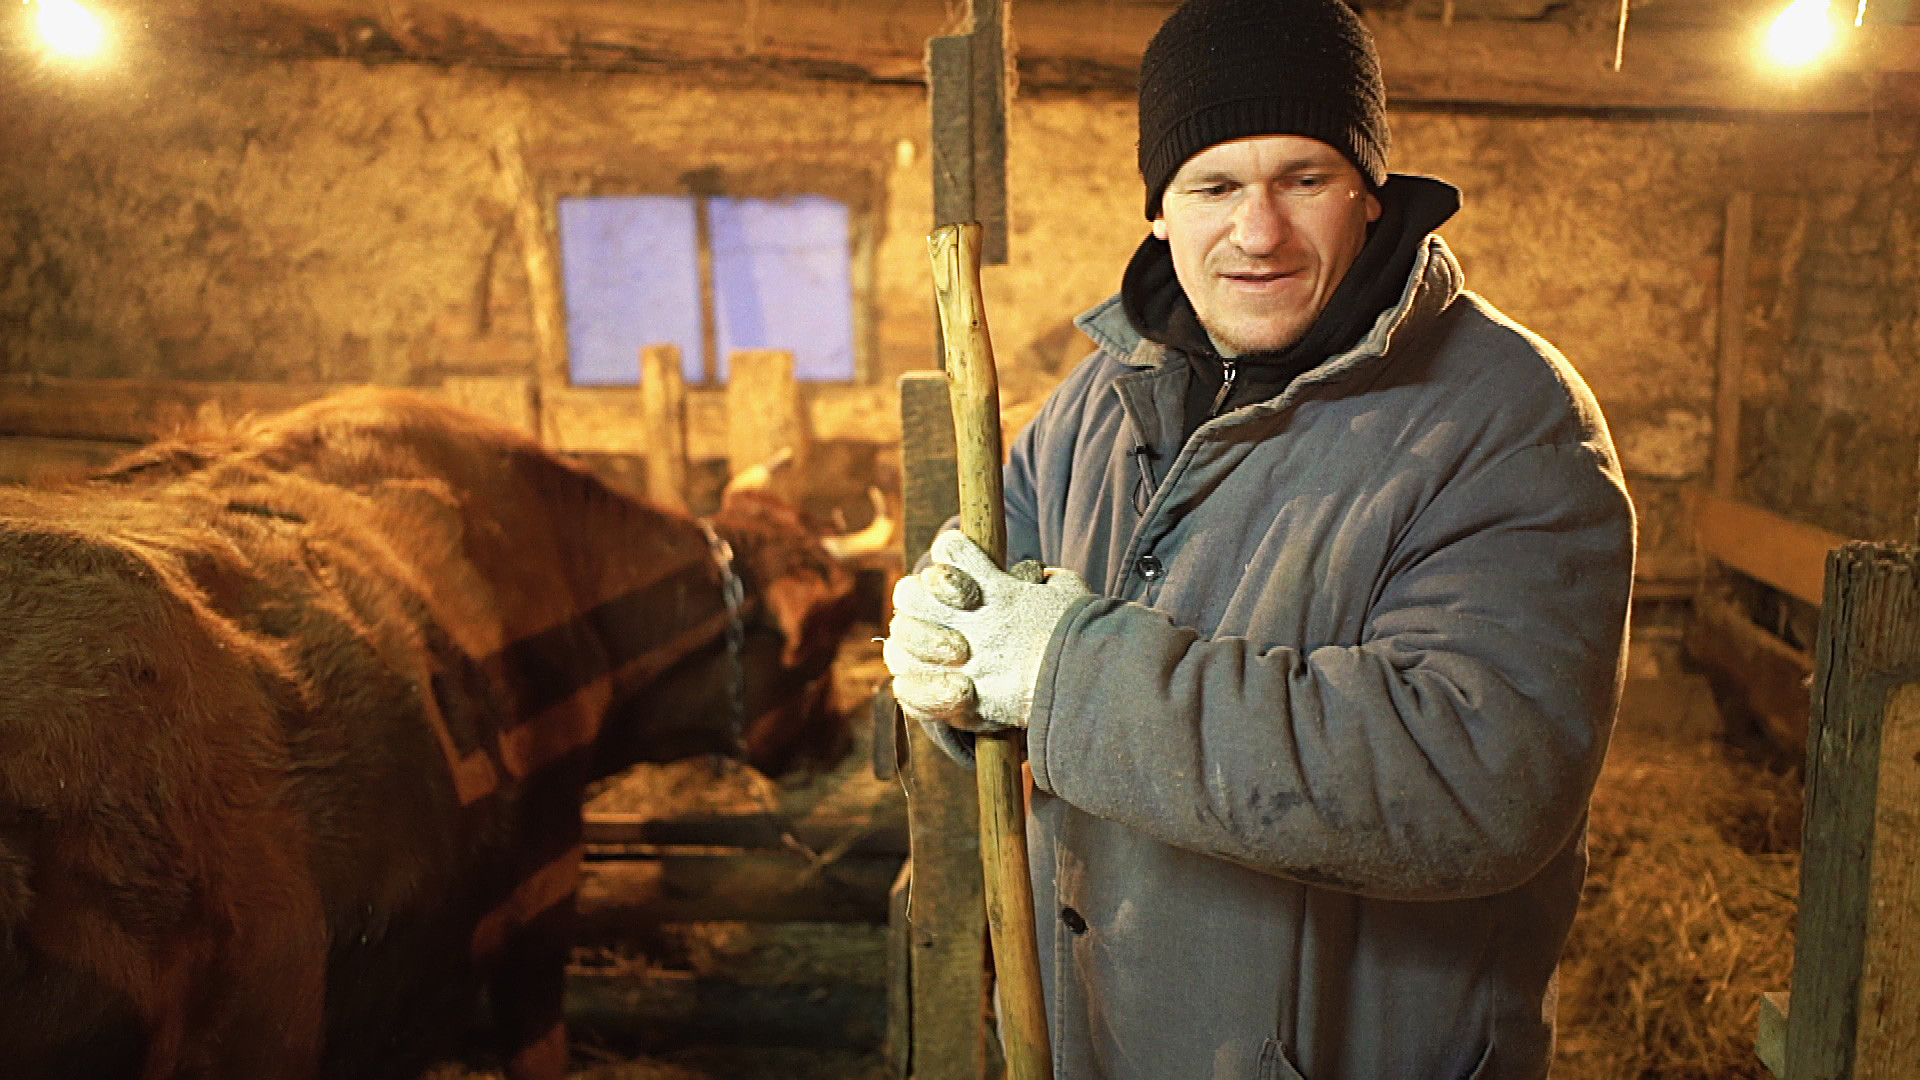 Youtubeファーマー 農家の生活の動画をアップし続けるロシア人 ロシア ビヨンド